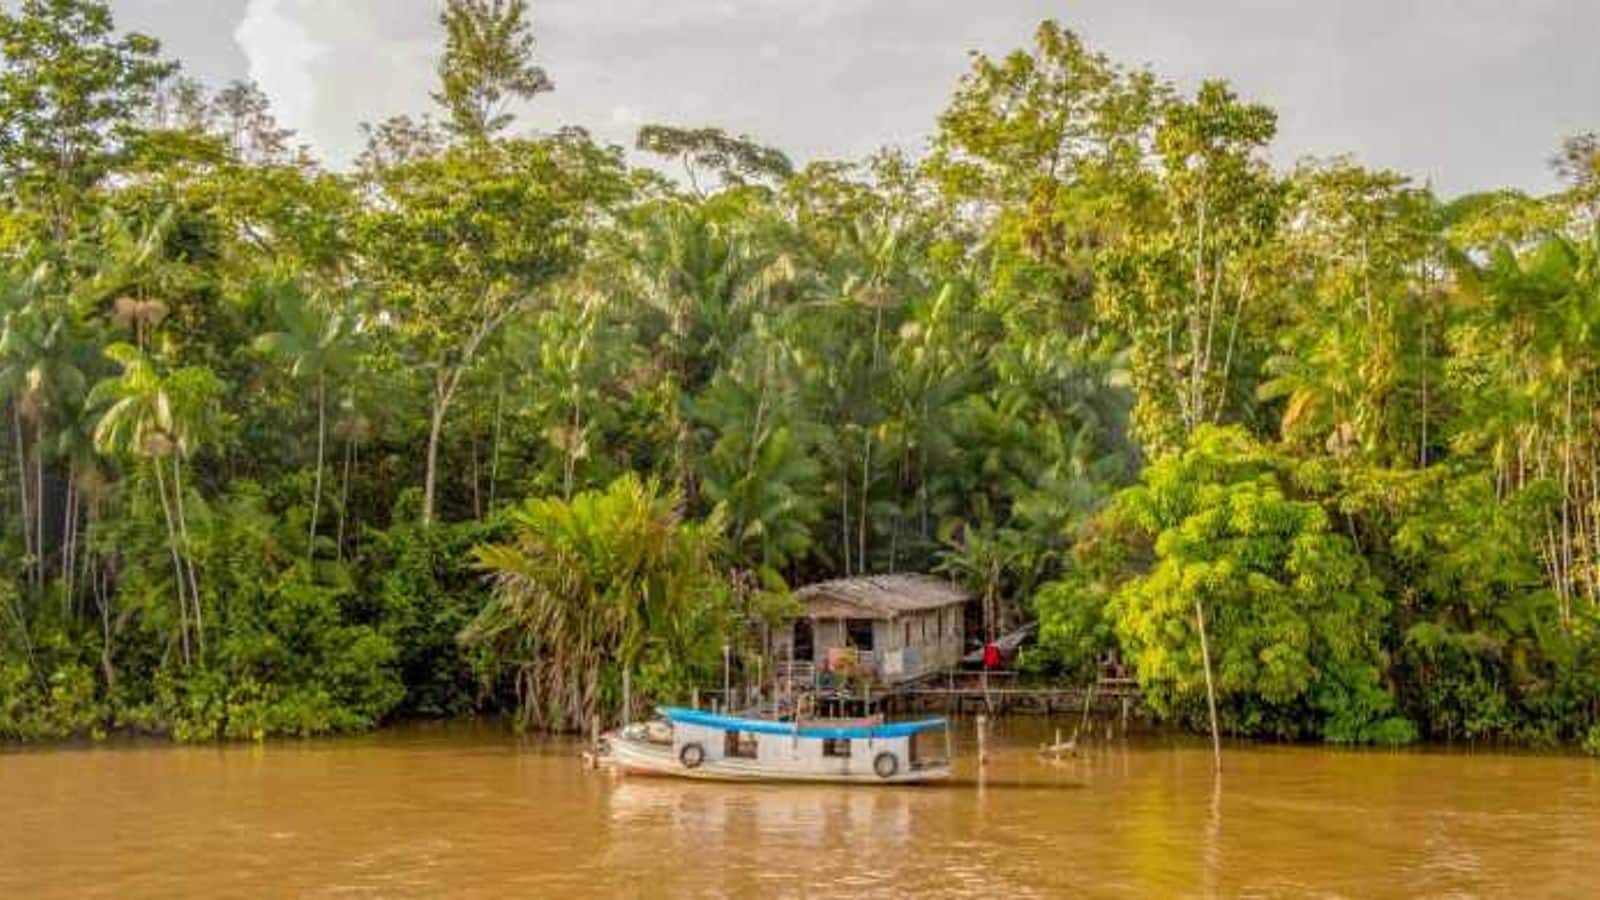 Embark on a rainforest adventure in Manaus, Brazil